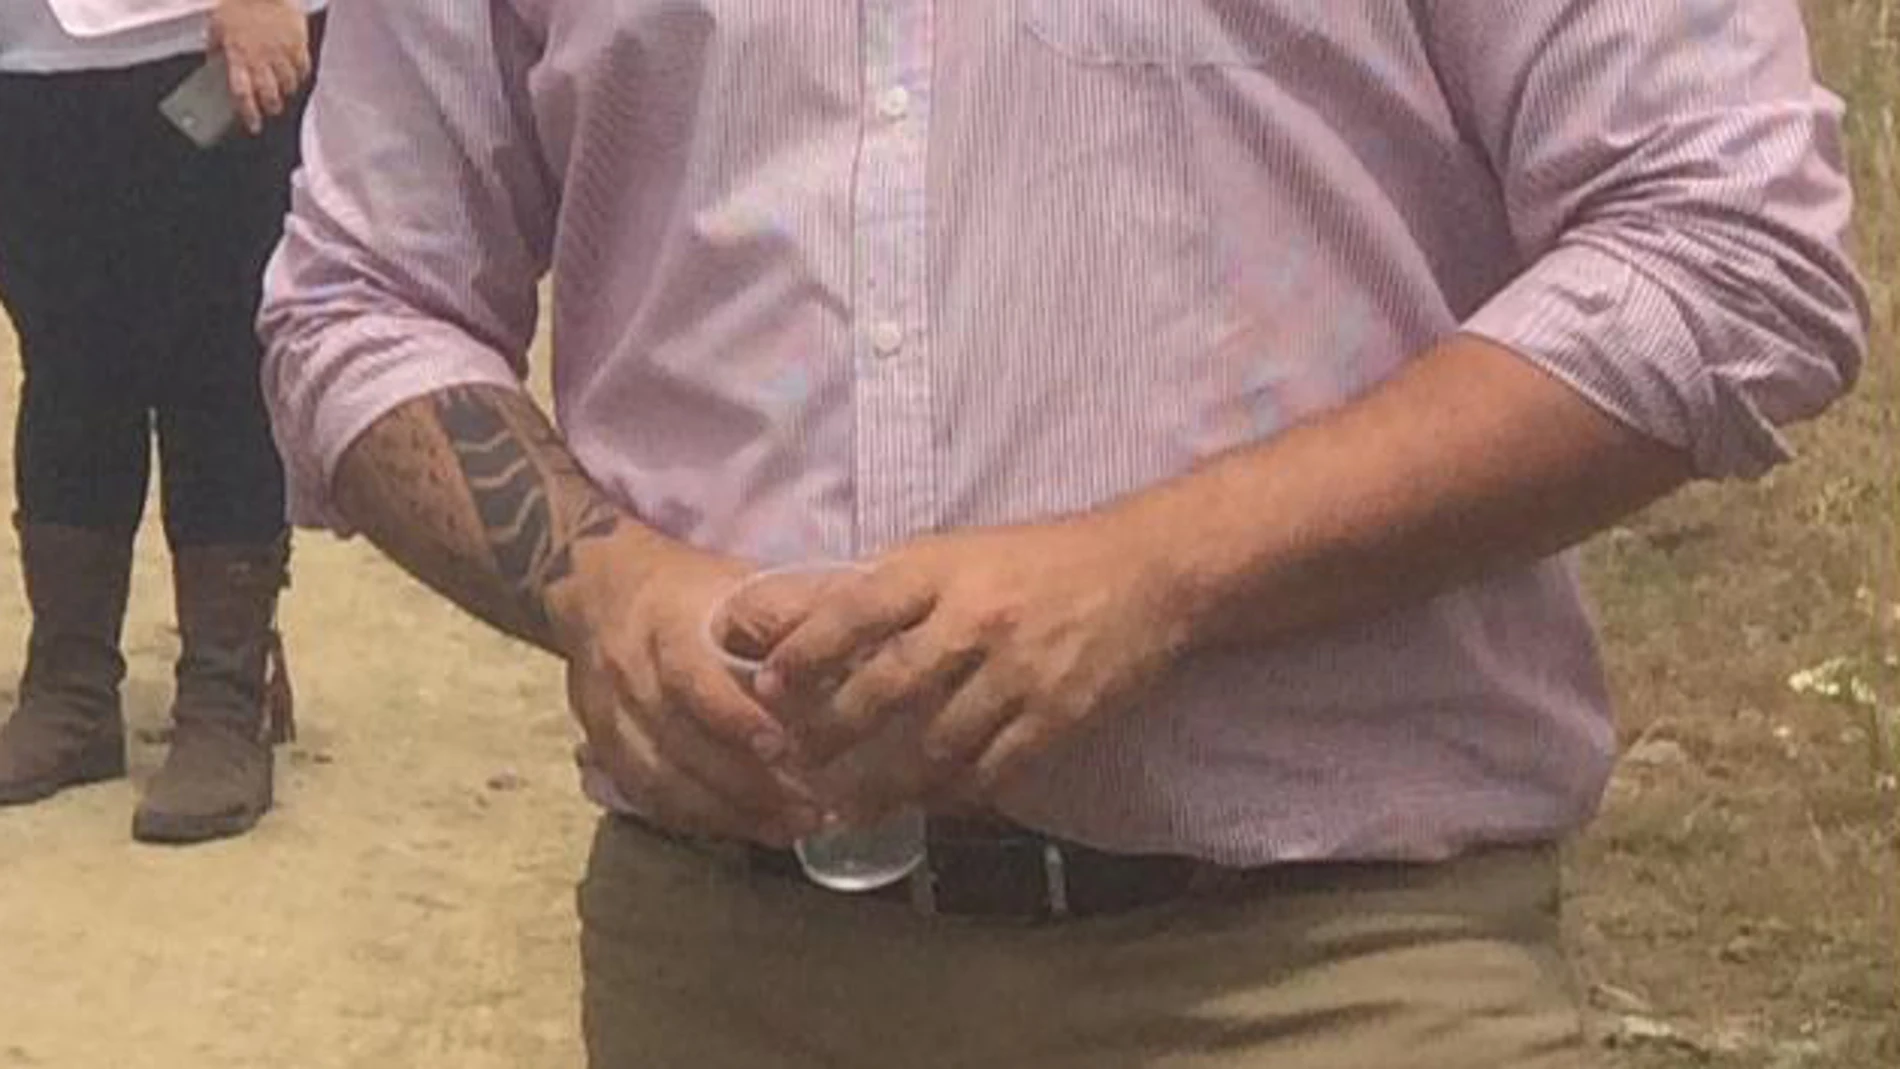 El tatuaje en el brazo del presunto asesino Eugenio Delgado.